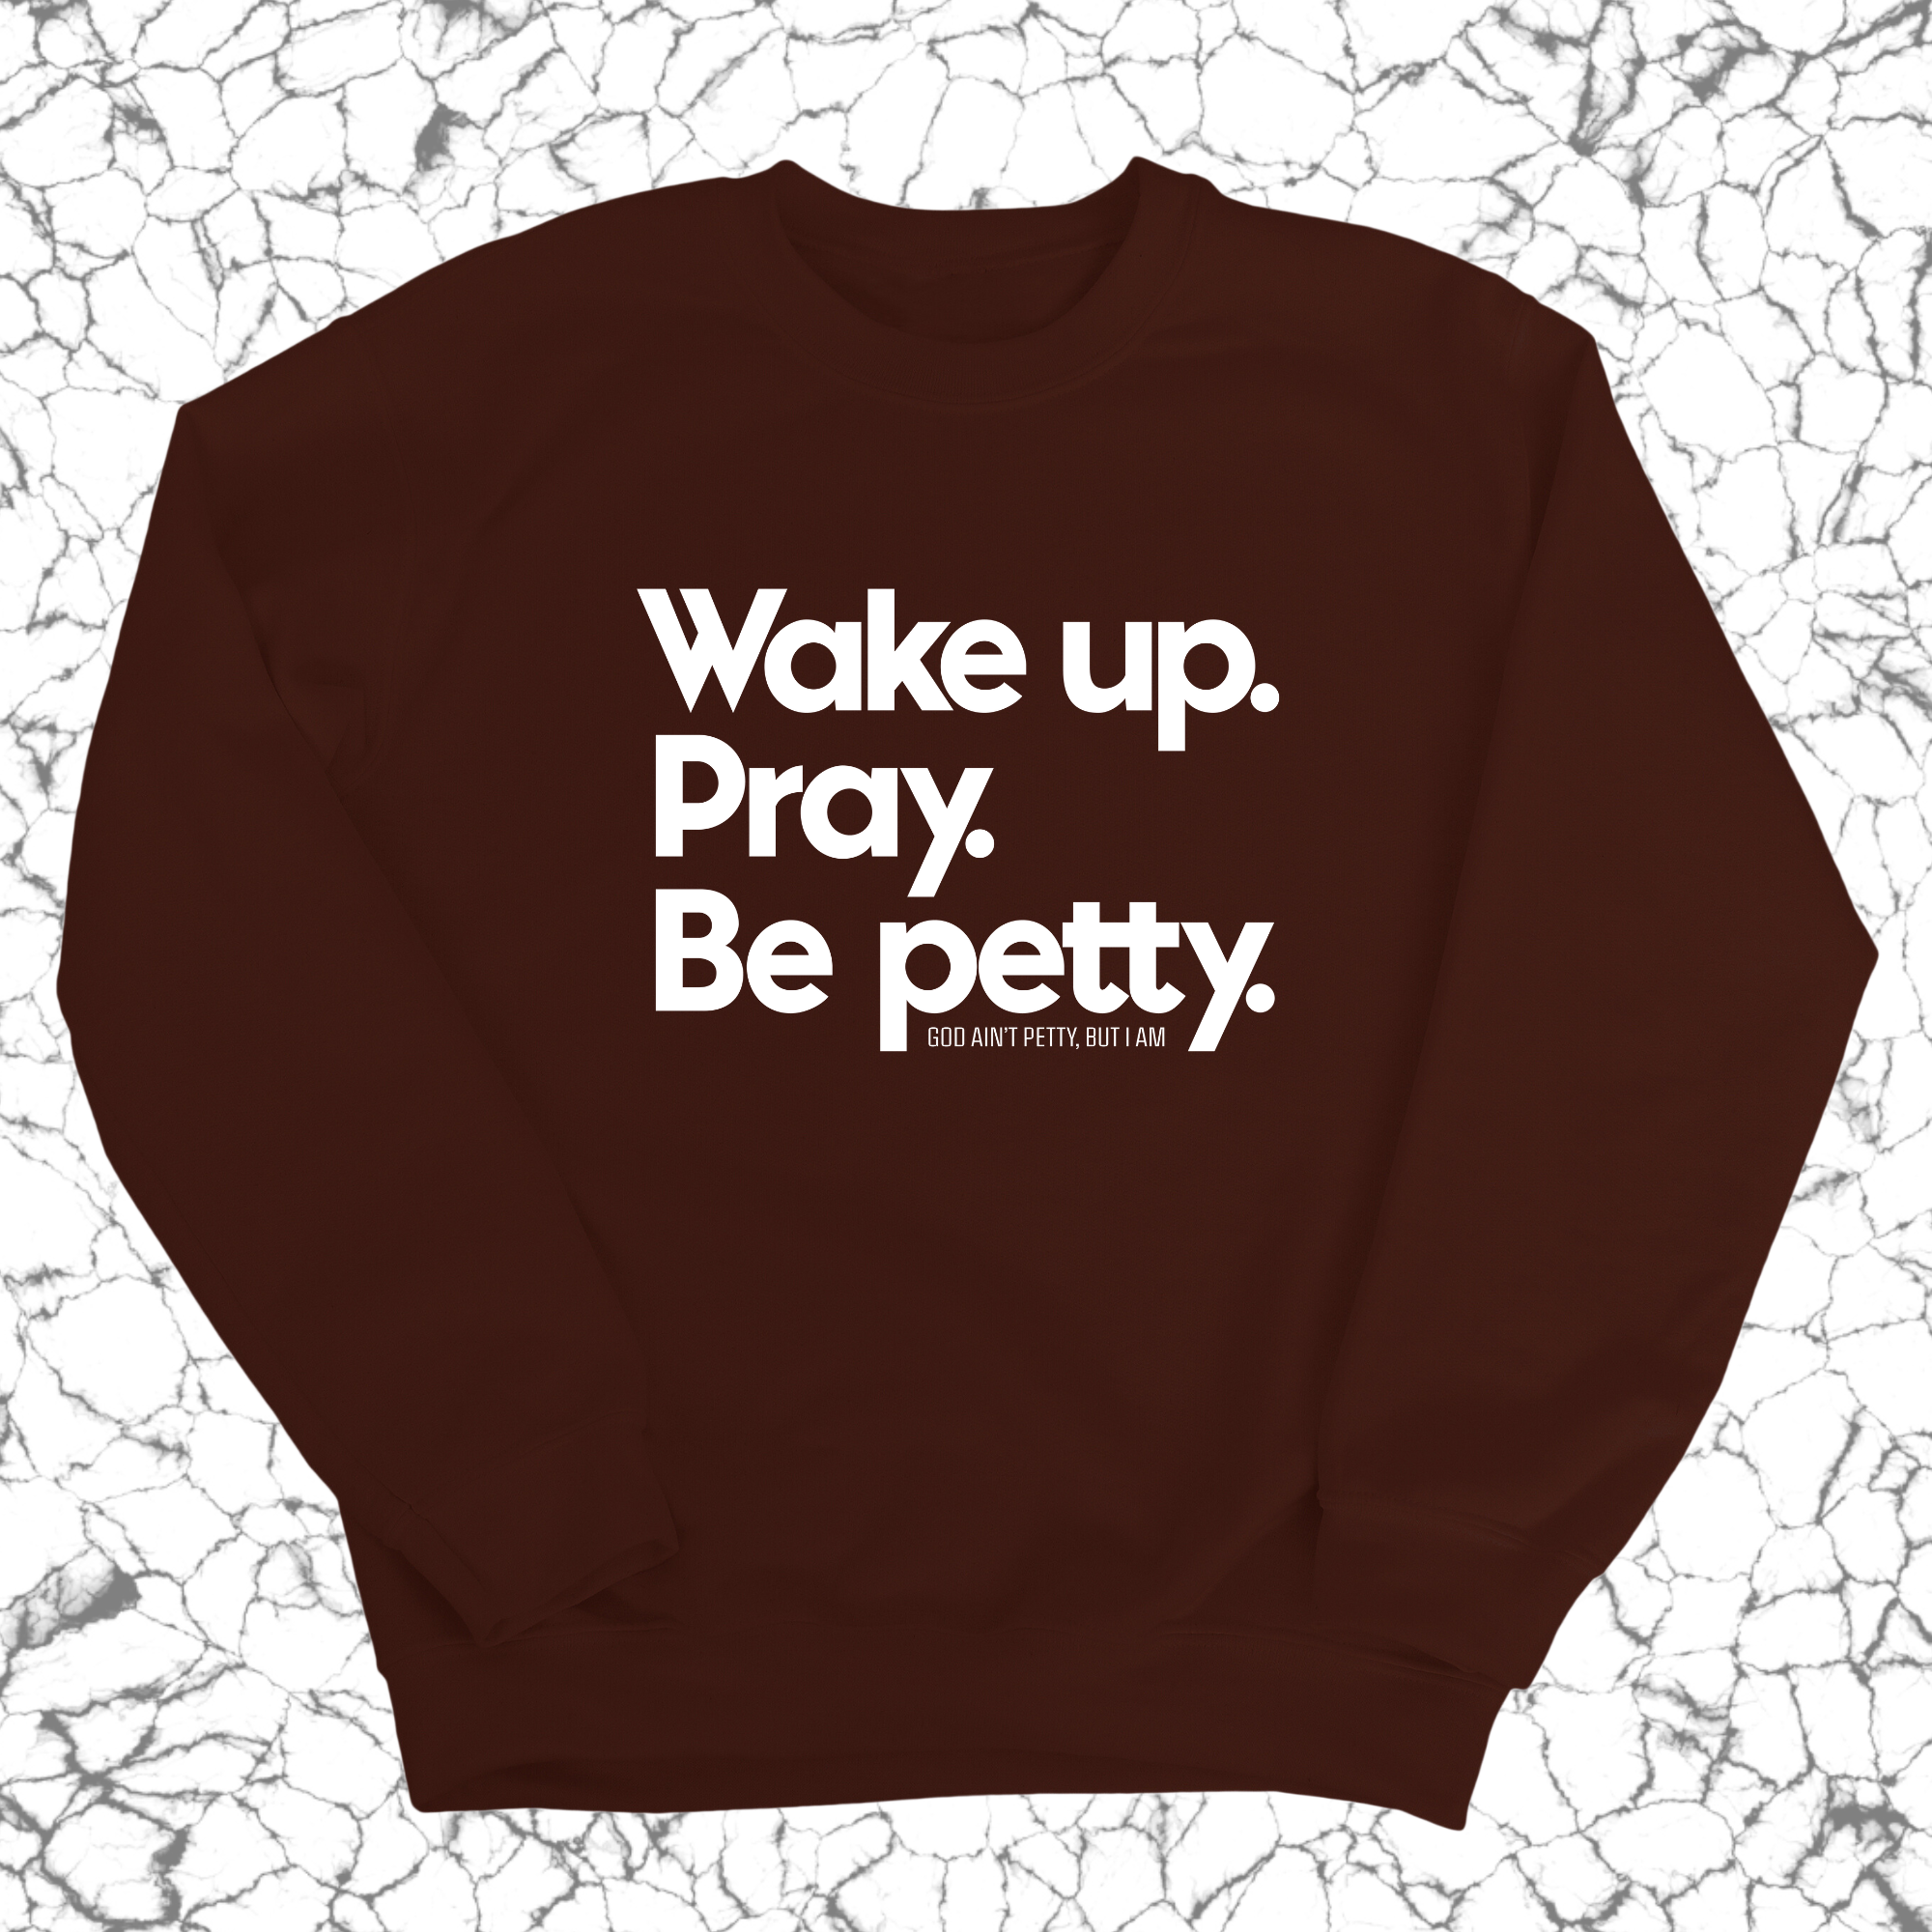 Wake up. Pray. Be Petty Unisex Sweatshirt-Sweatshirt-The Original God Ain't Petty But I Am